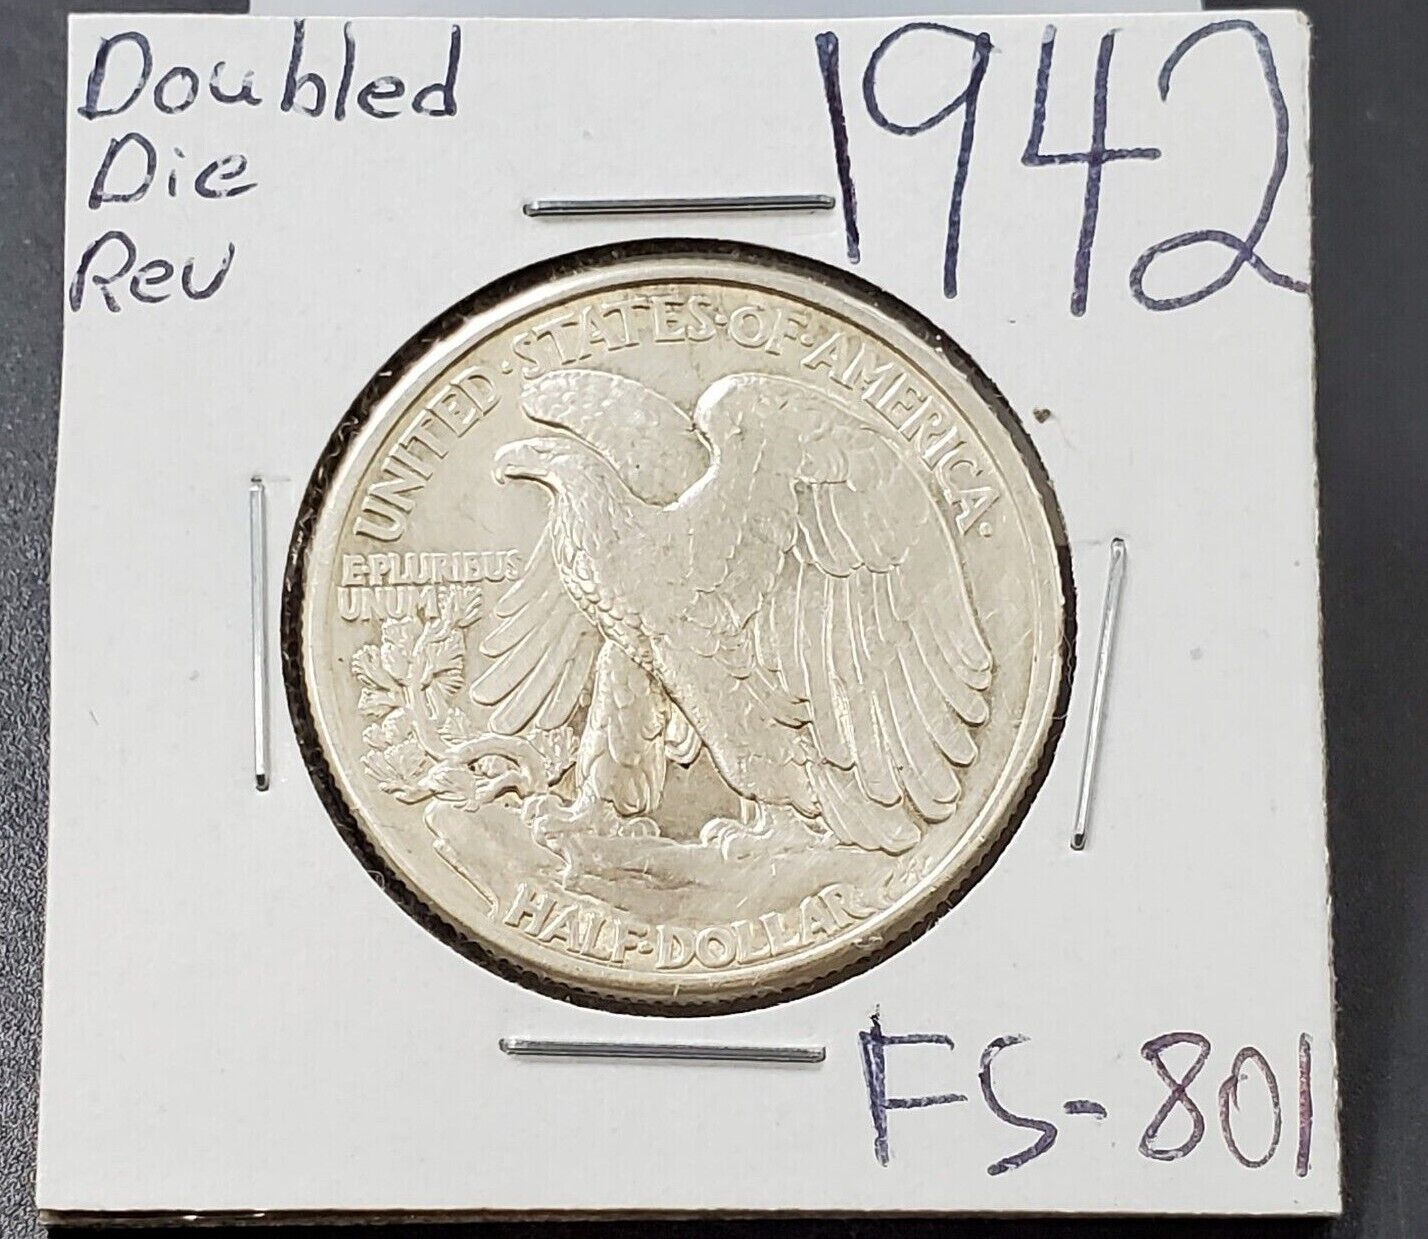 1942 P Walking Liberty Silver Eagle Half Dollar Coin AU Details FS-801